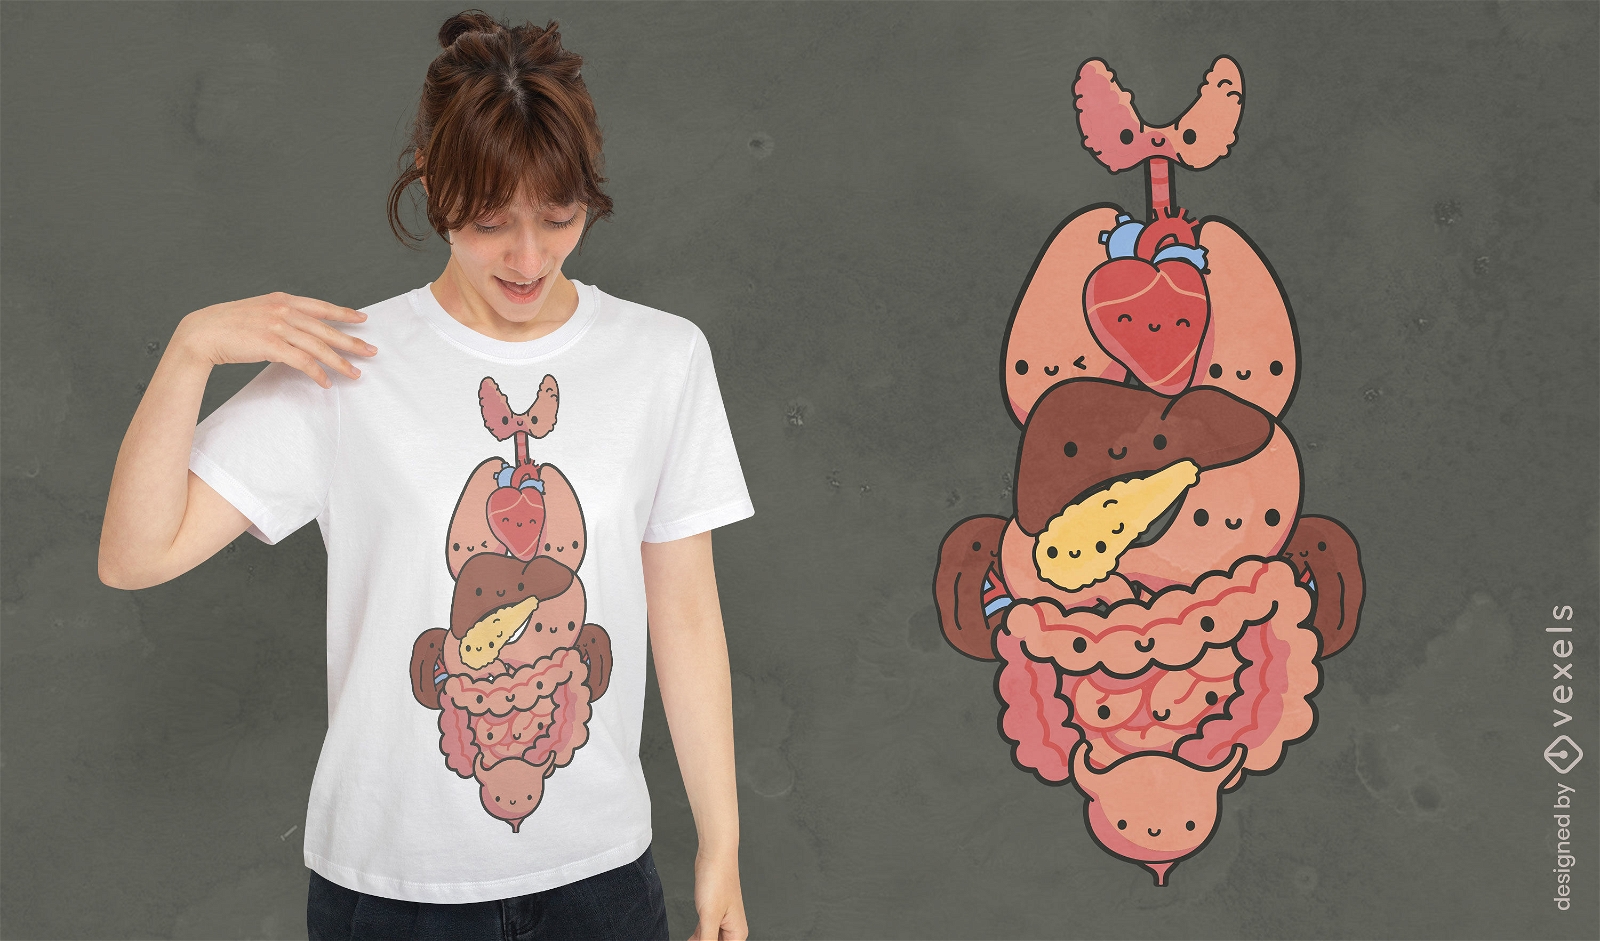 Design bonito de camiseta de anatomia